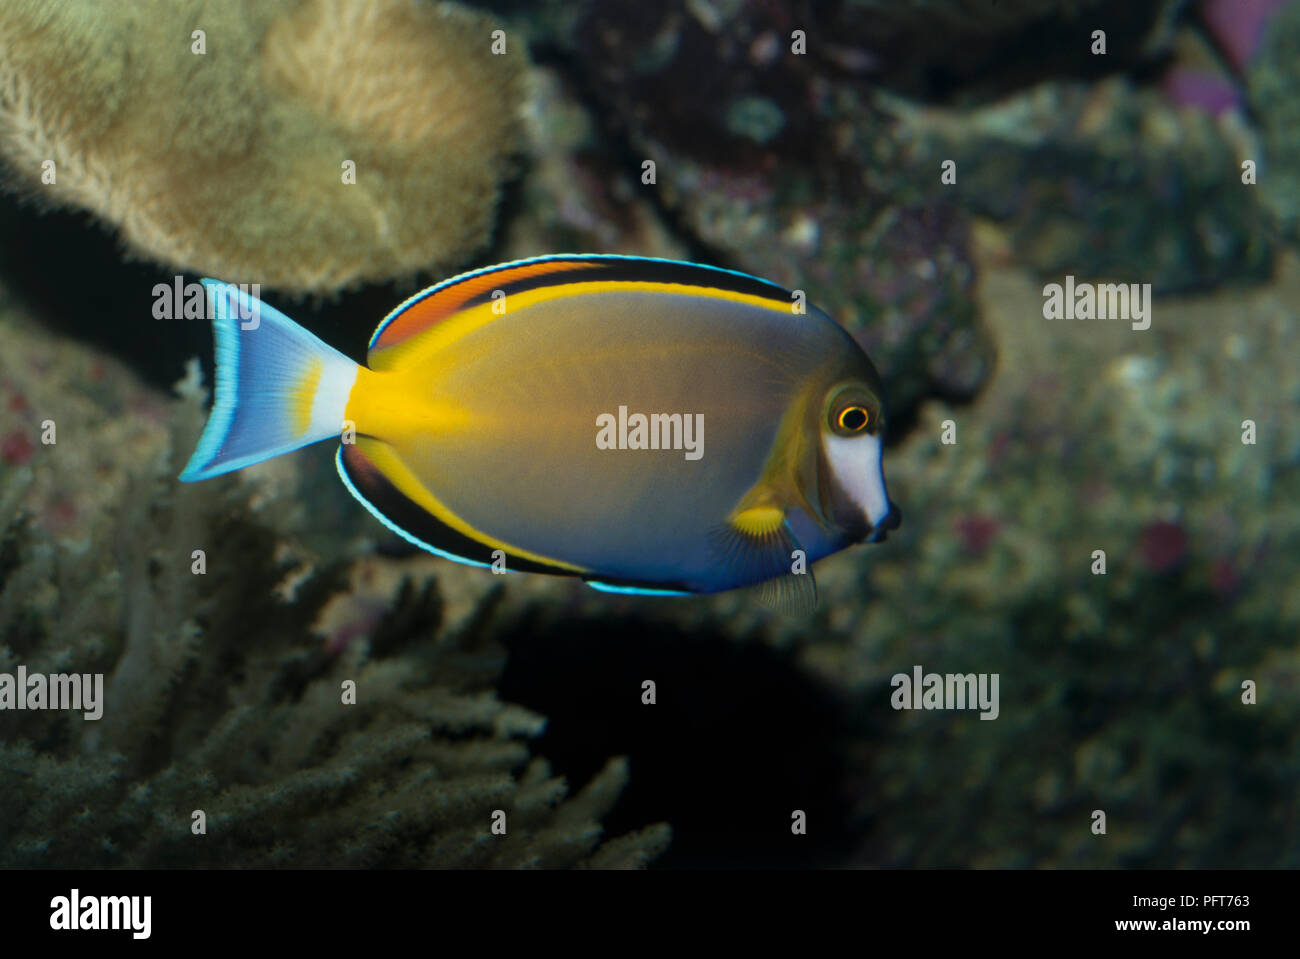 Gold Rim Tang (Acanthurus nigricans) swimming in fish tank Stock Photo